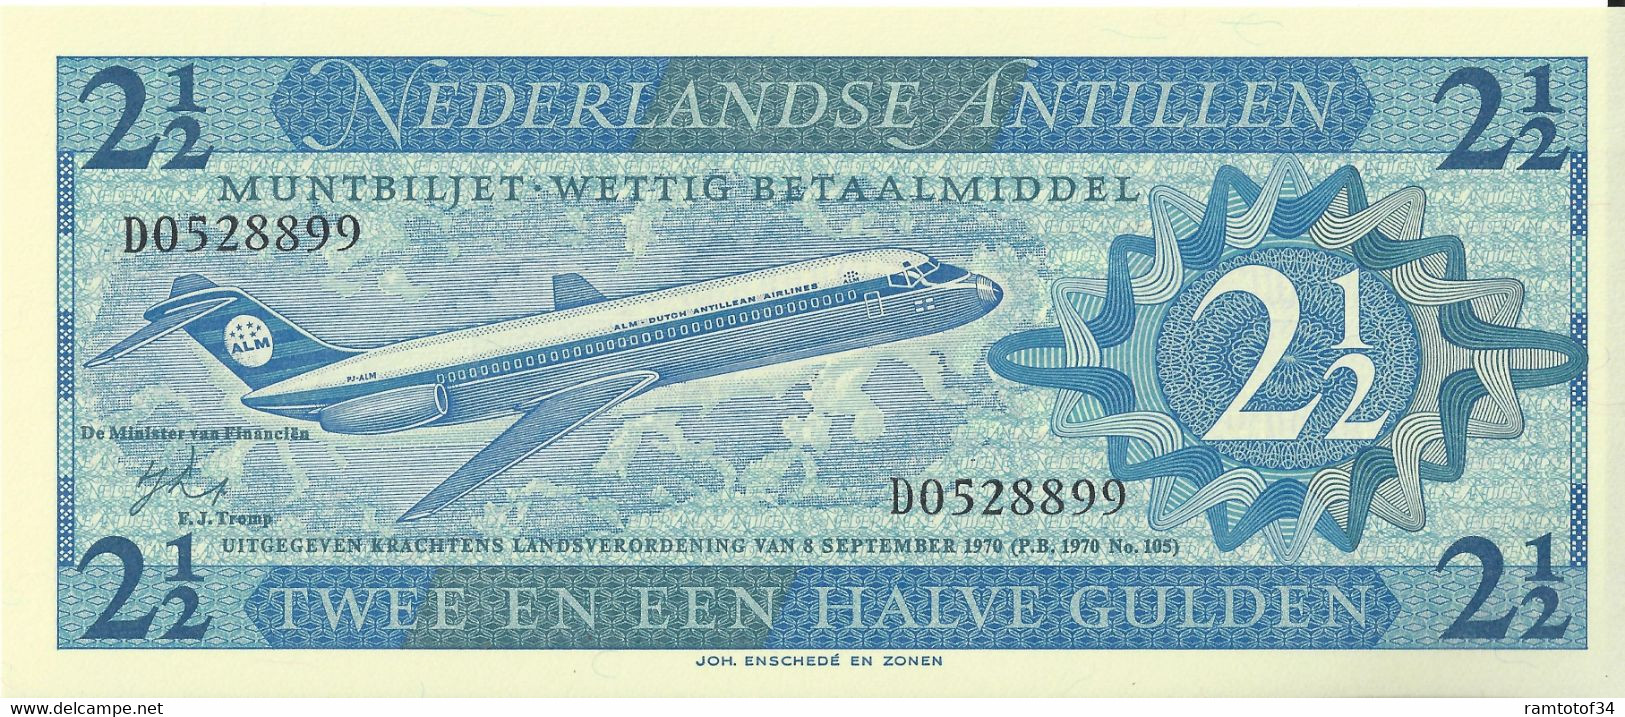 NEDERLANDLANDSE ANTILLEN - 2.5 Gulden 1970 UNC - Antilles Néerlandaises (...-1986)